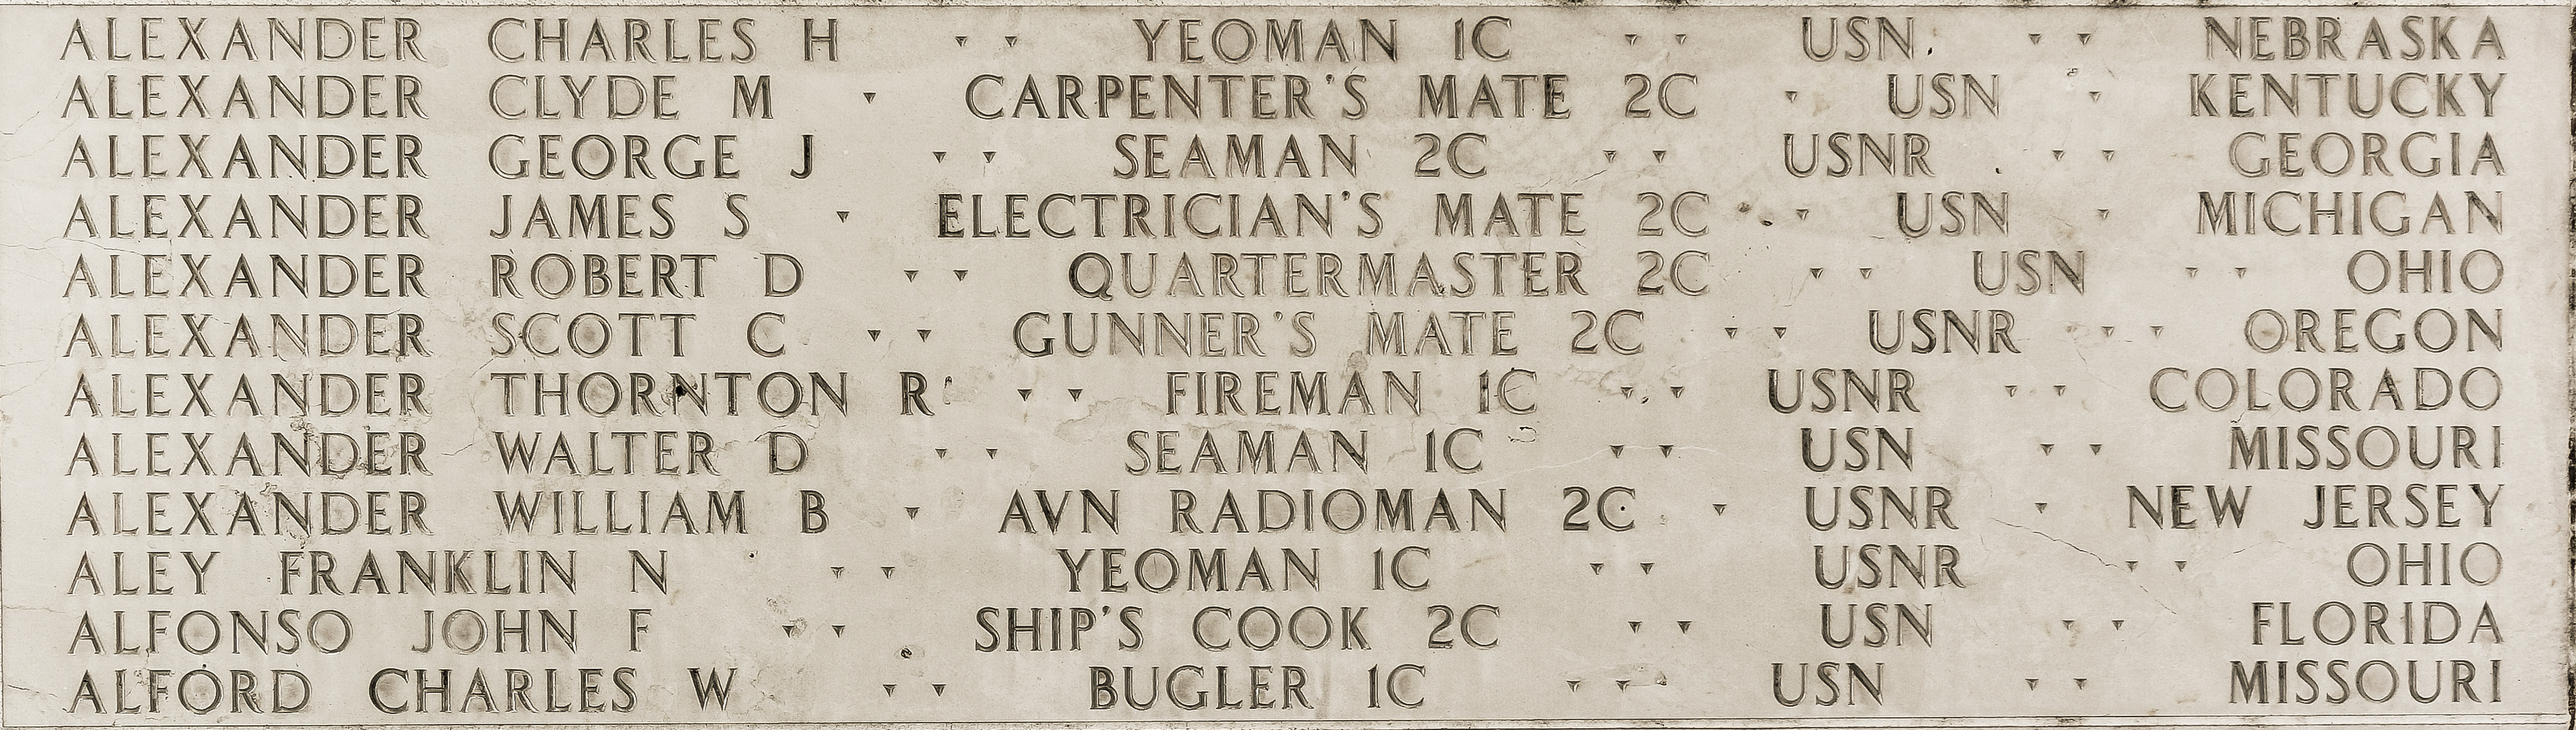 William B. Alexander, Aviation Radioman Second Class